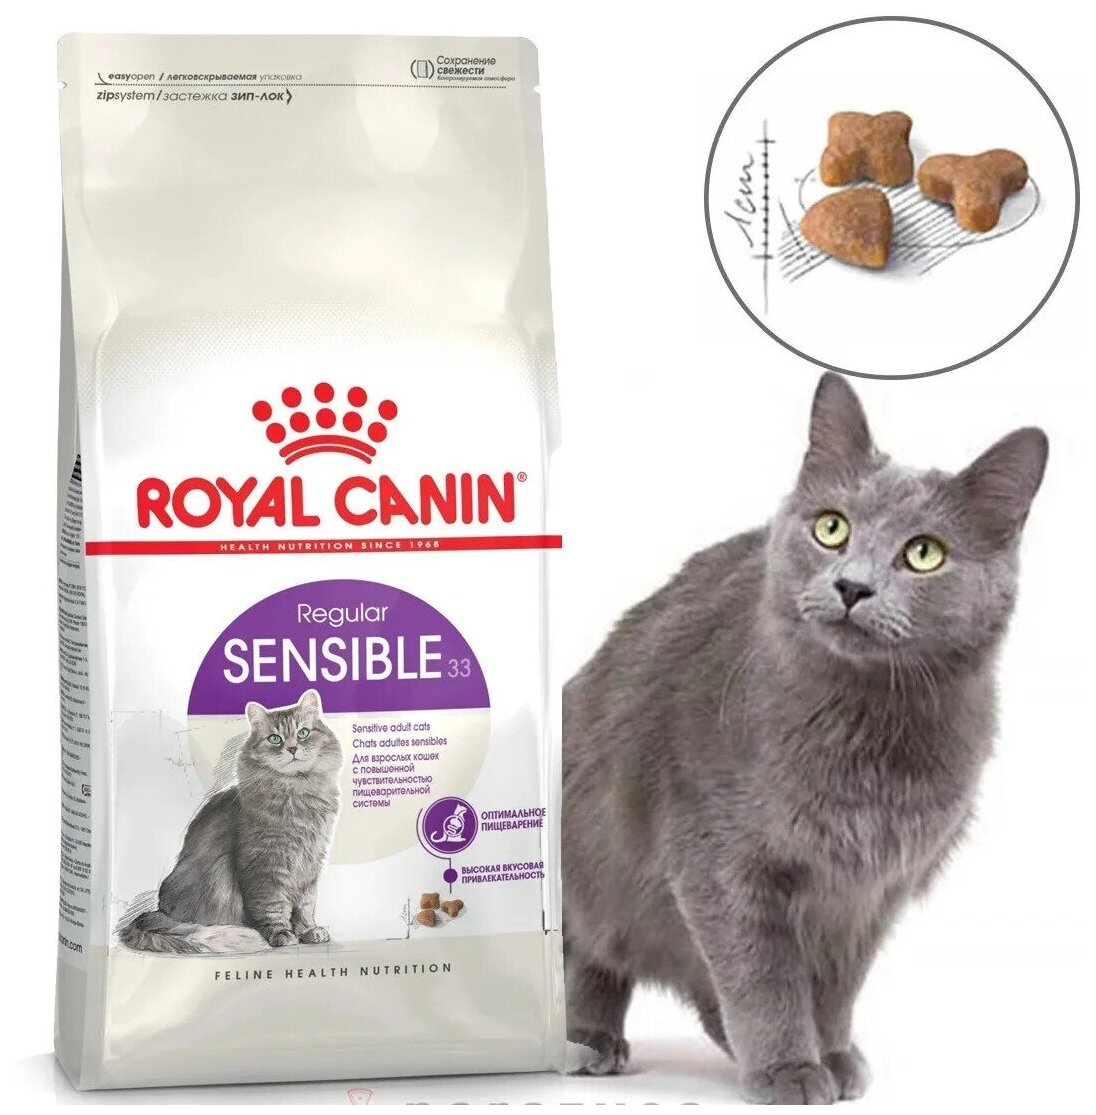 Royal Canin SENSIBLE 33 (сенсибл) (Сухой корм 1.2 кг) - фотография № 6